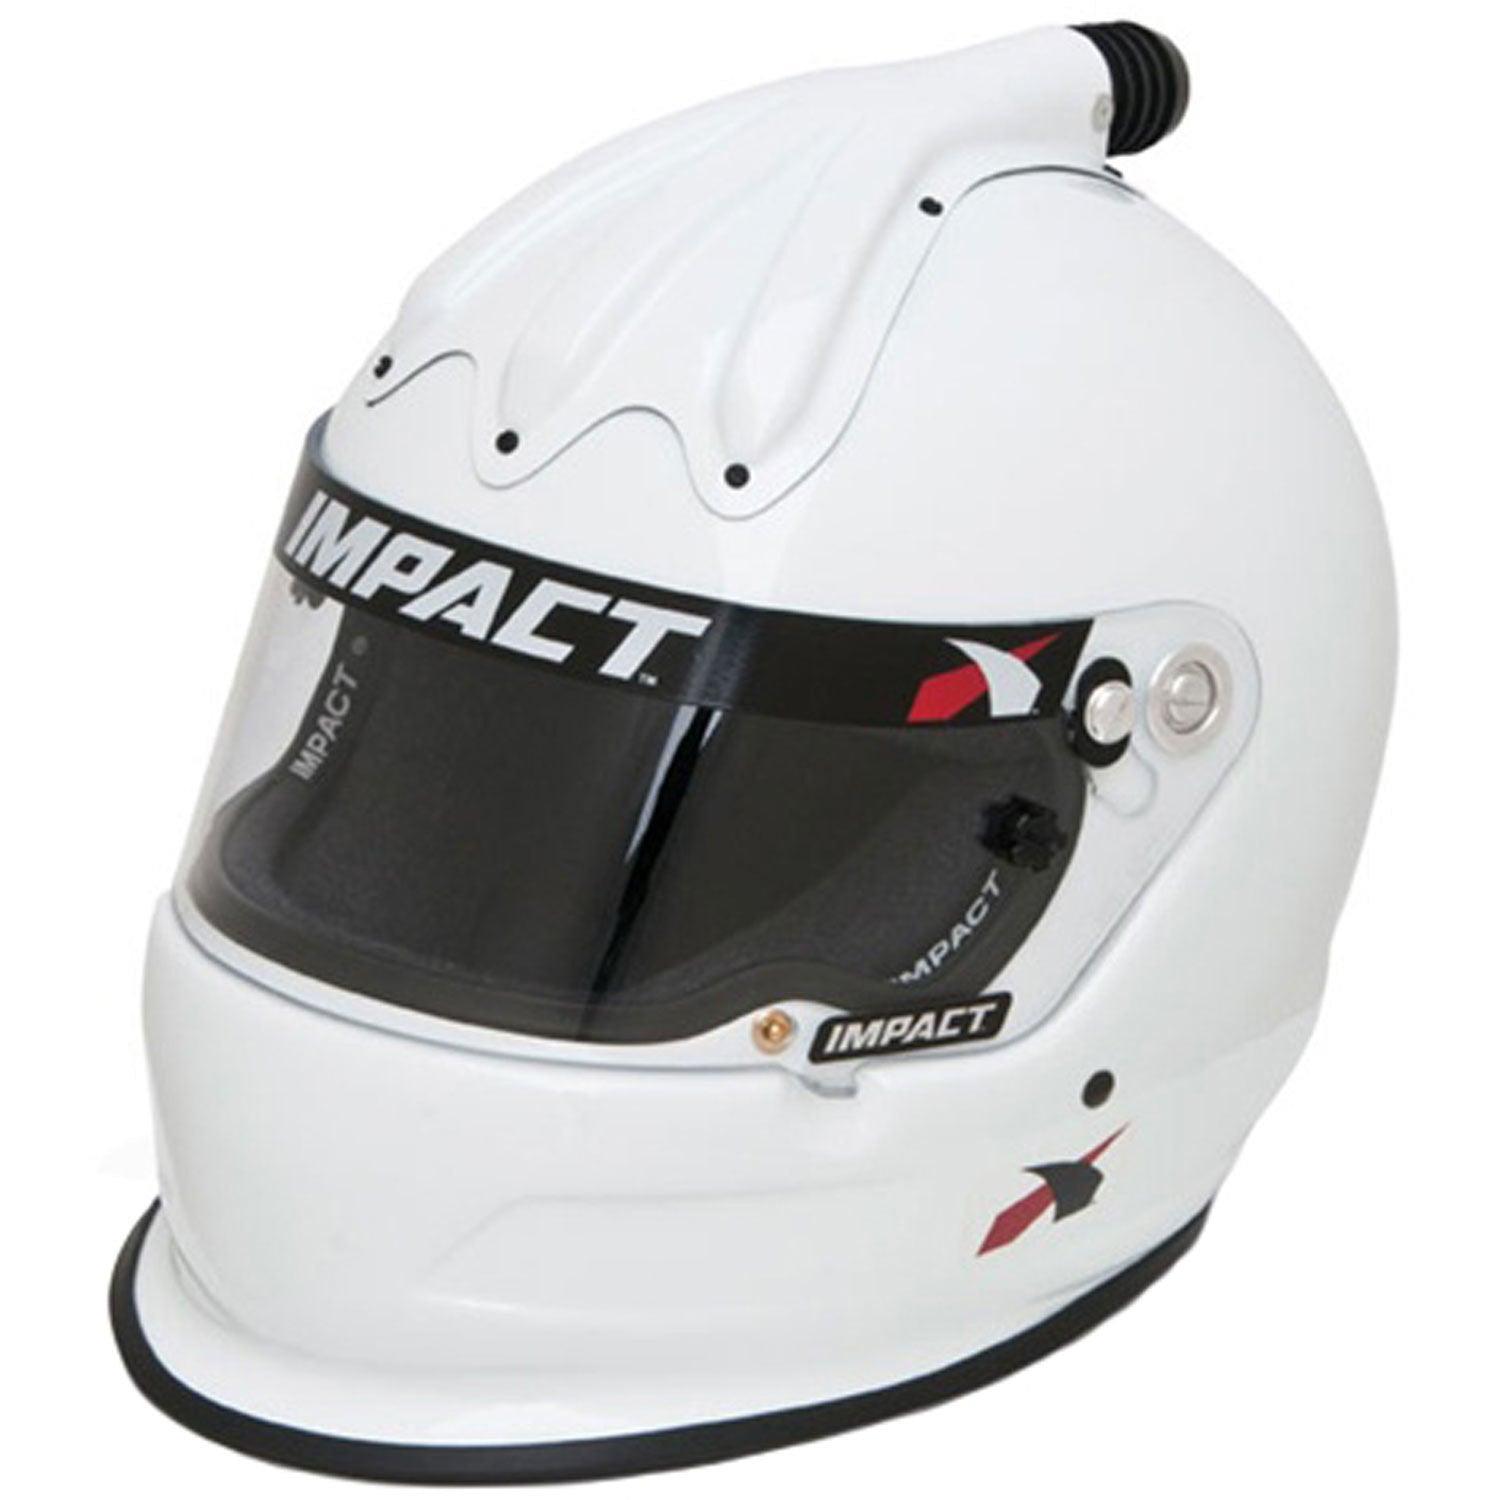 Helmet Super Charger Medium White SA2020 - Burlile Performance Products